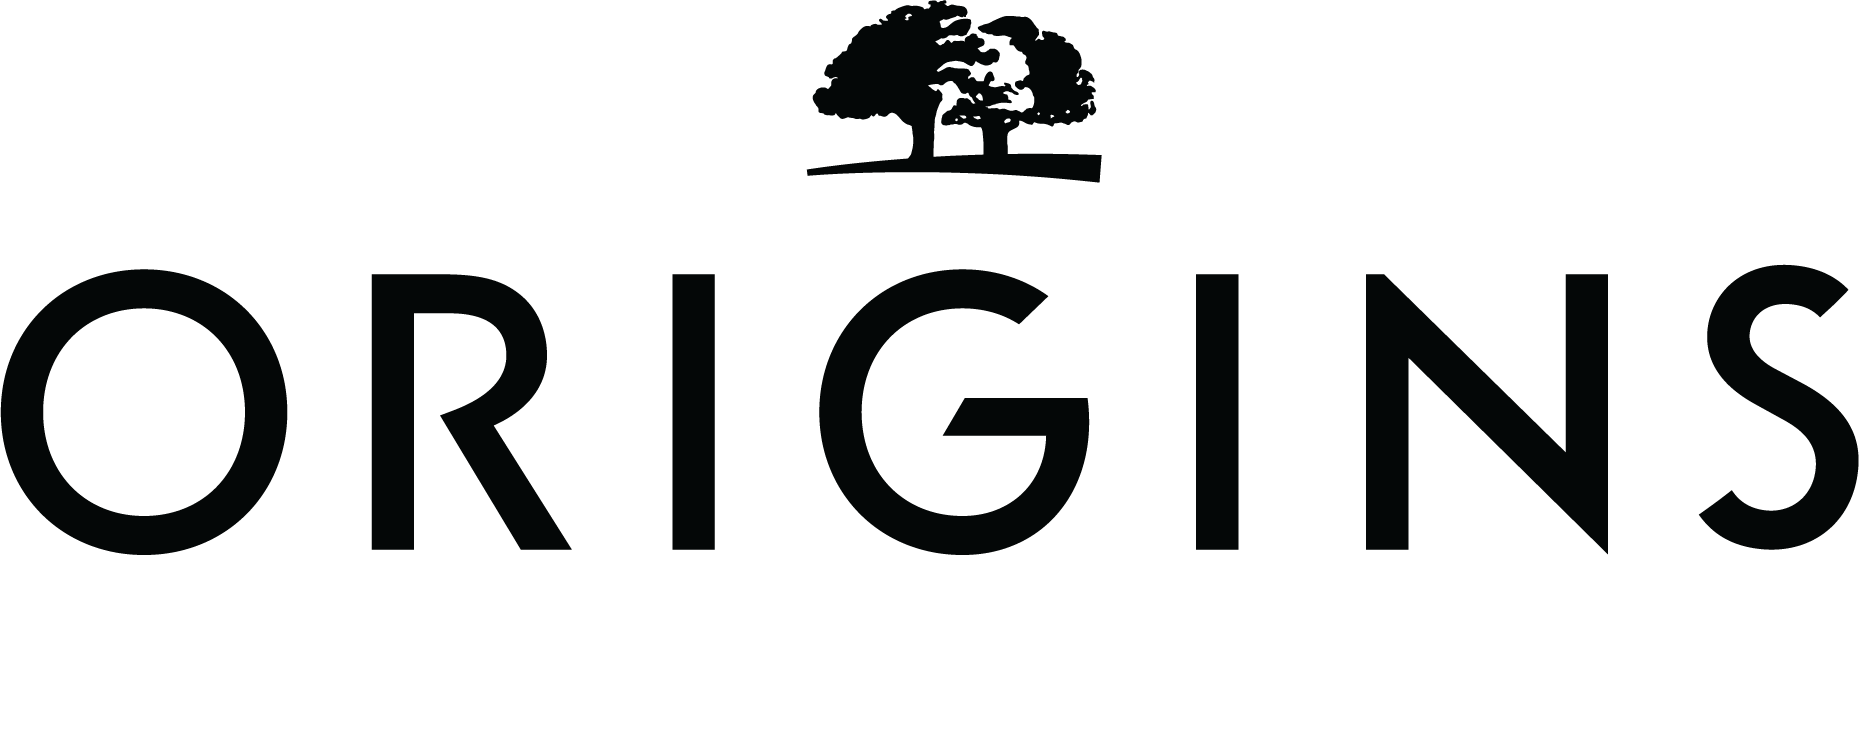 17. origins logo.png